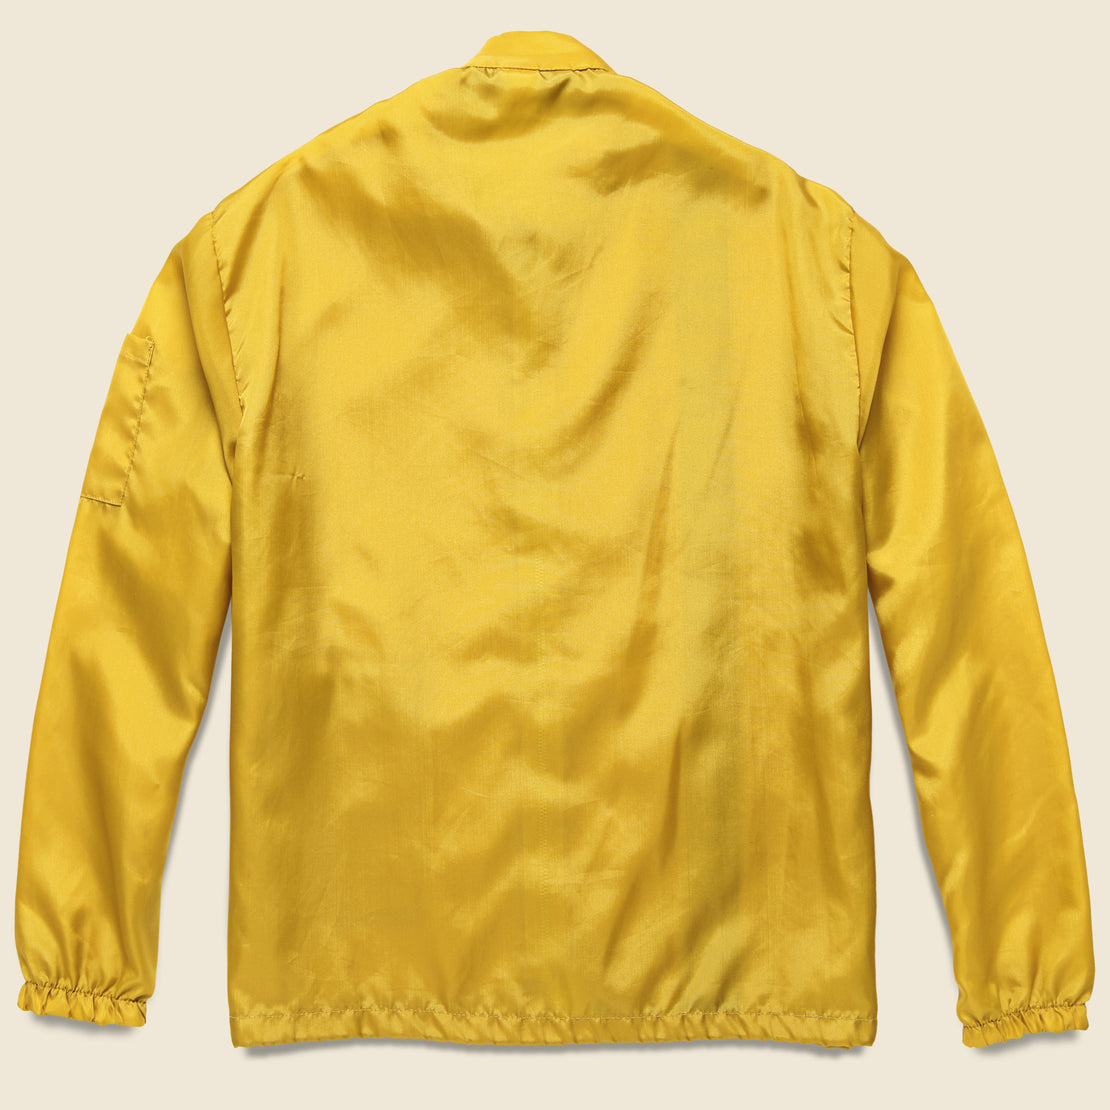 Swingster Trojans Nylon Racing Jacket - Yellow/Black/White